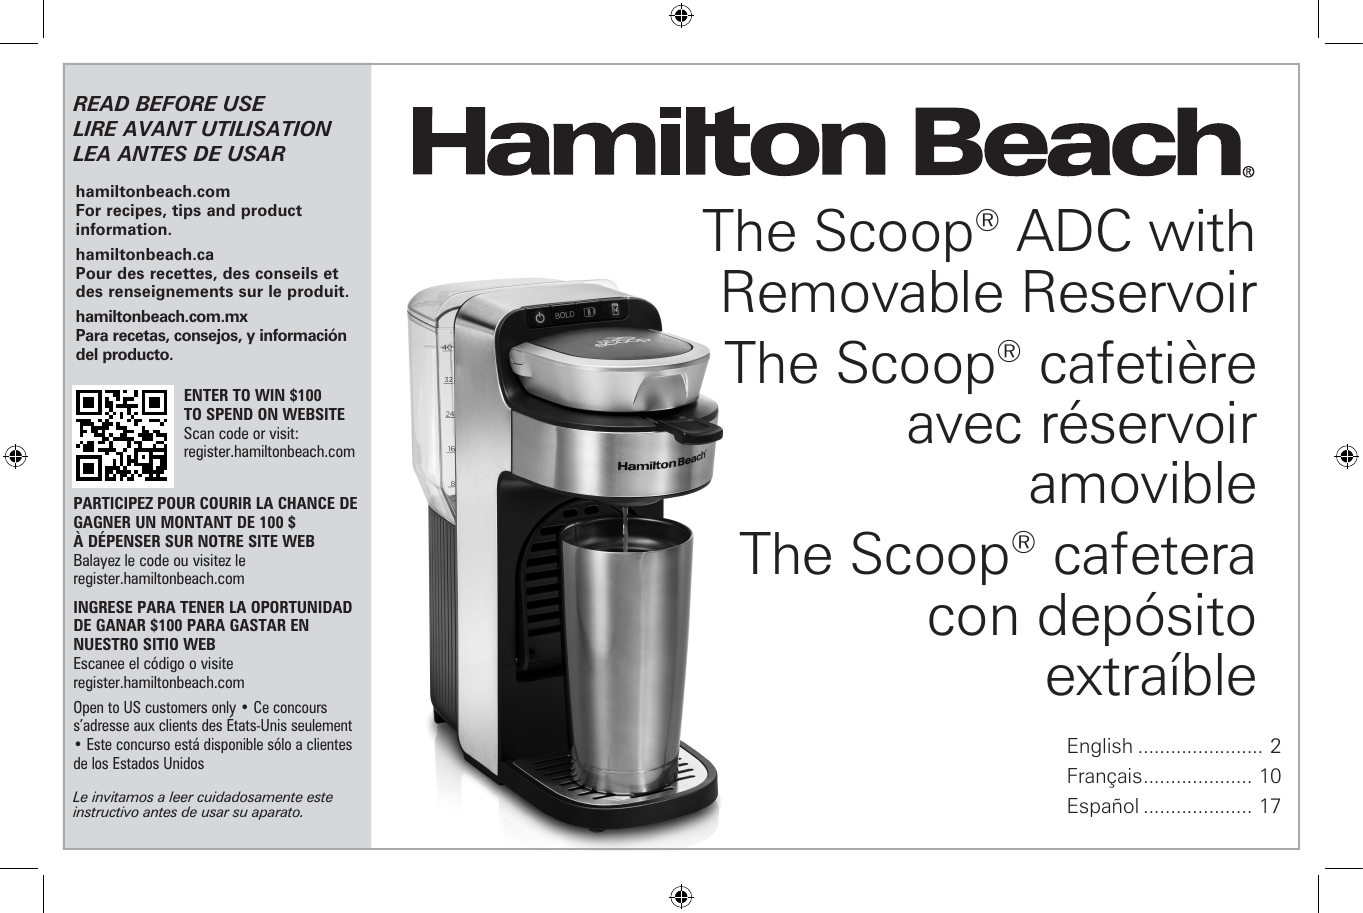 Hamilton Beach BrewStation 49150 Coffee Maker Review - Consumer